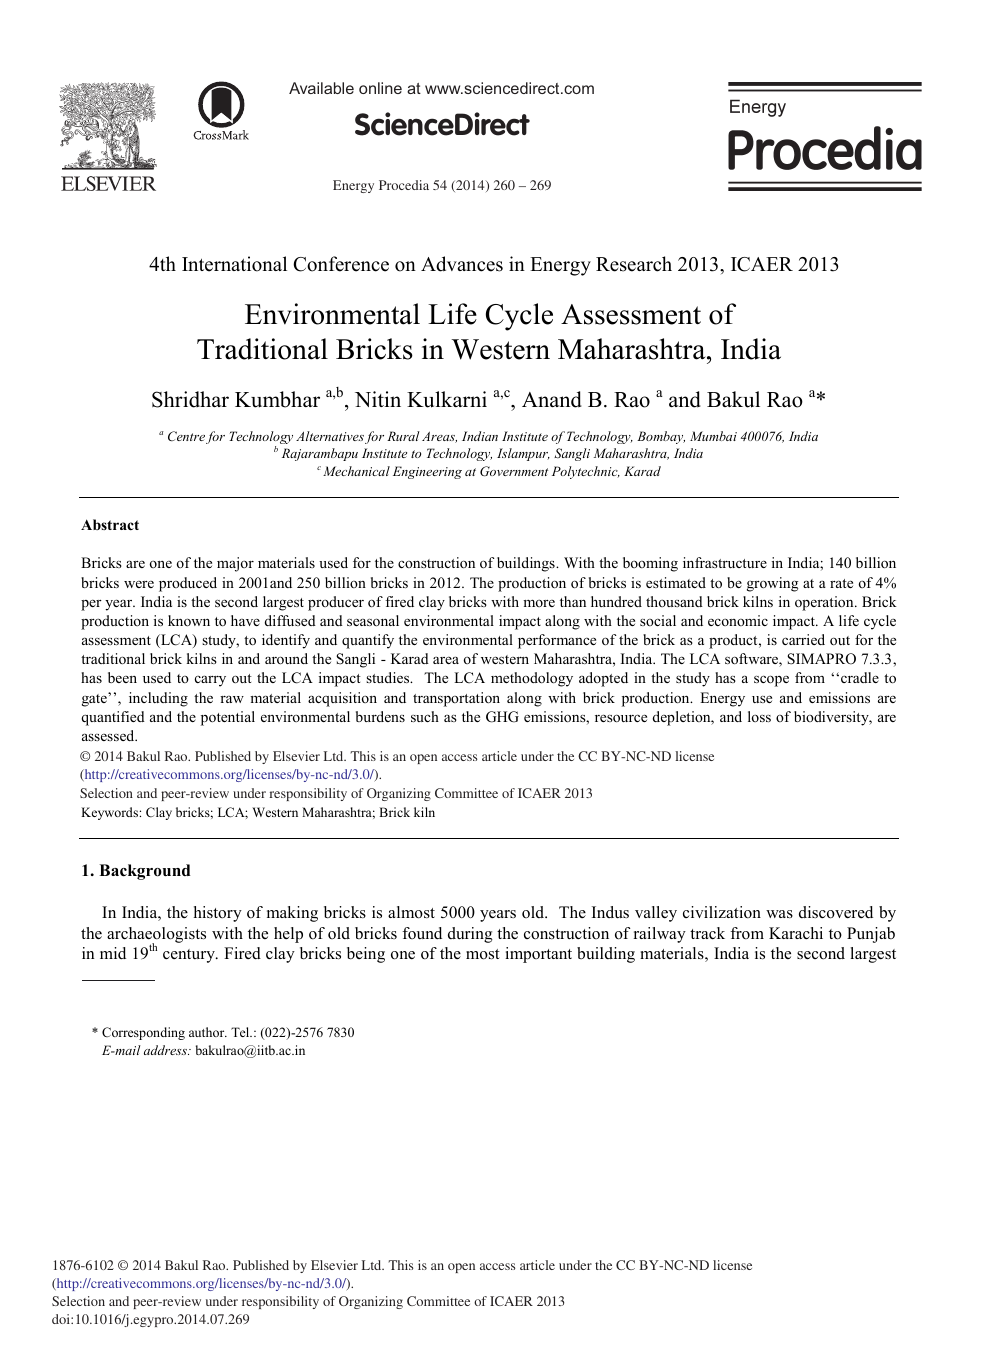 Environmental Life Cycle Assessment of Traditional Bricks in Western Maharashtra, India